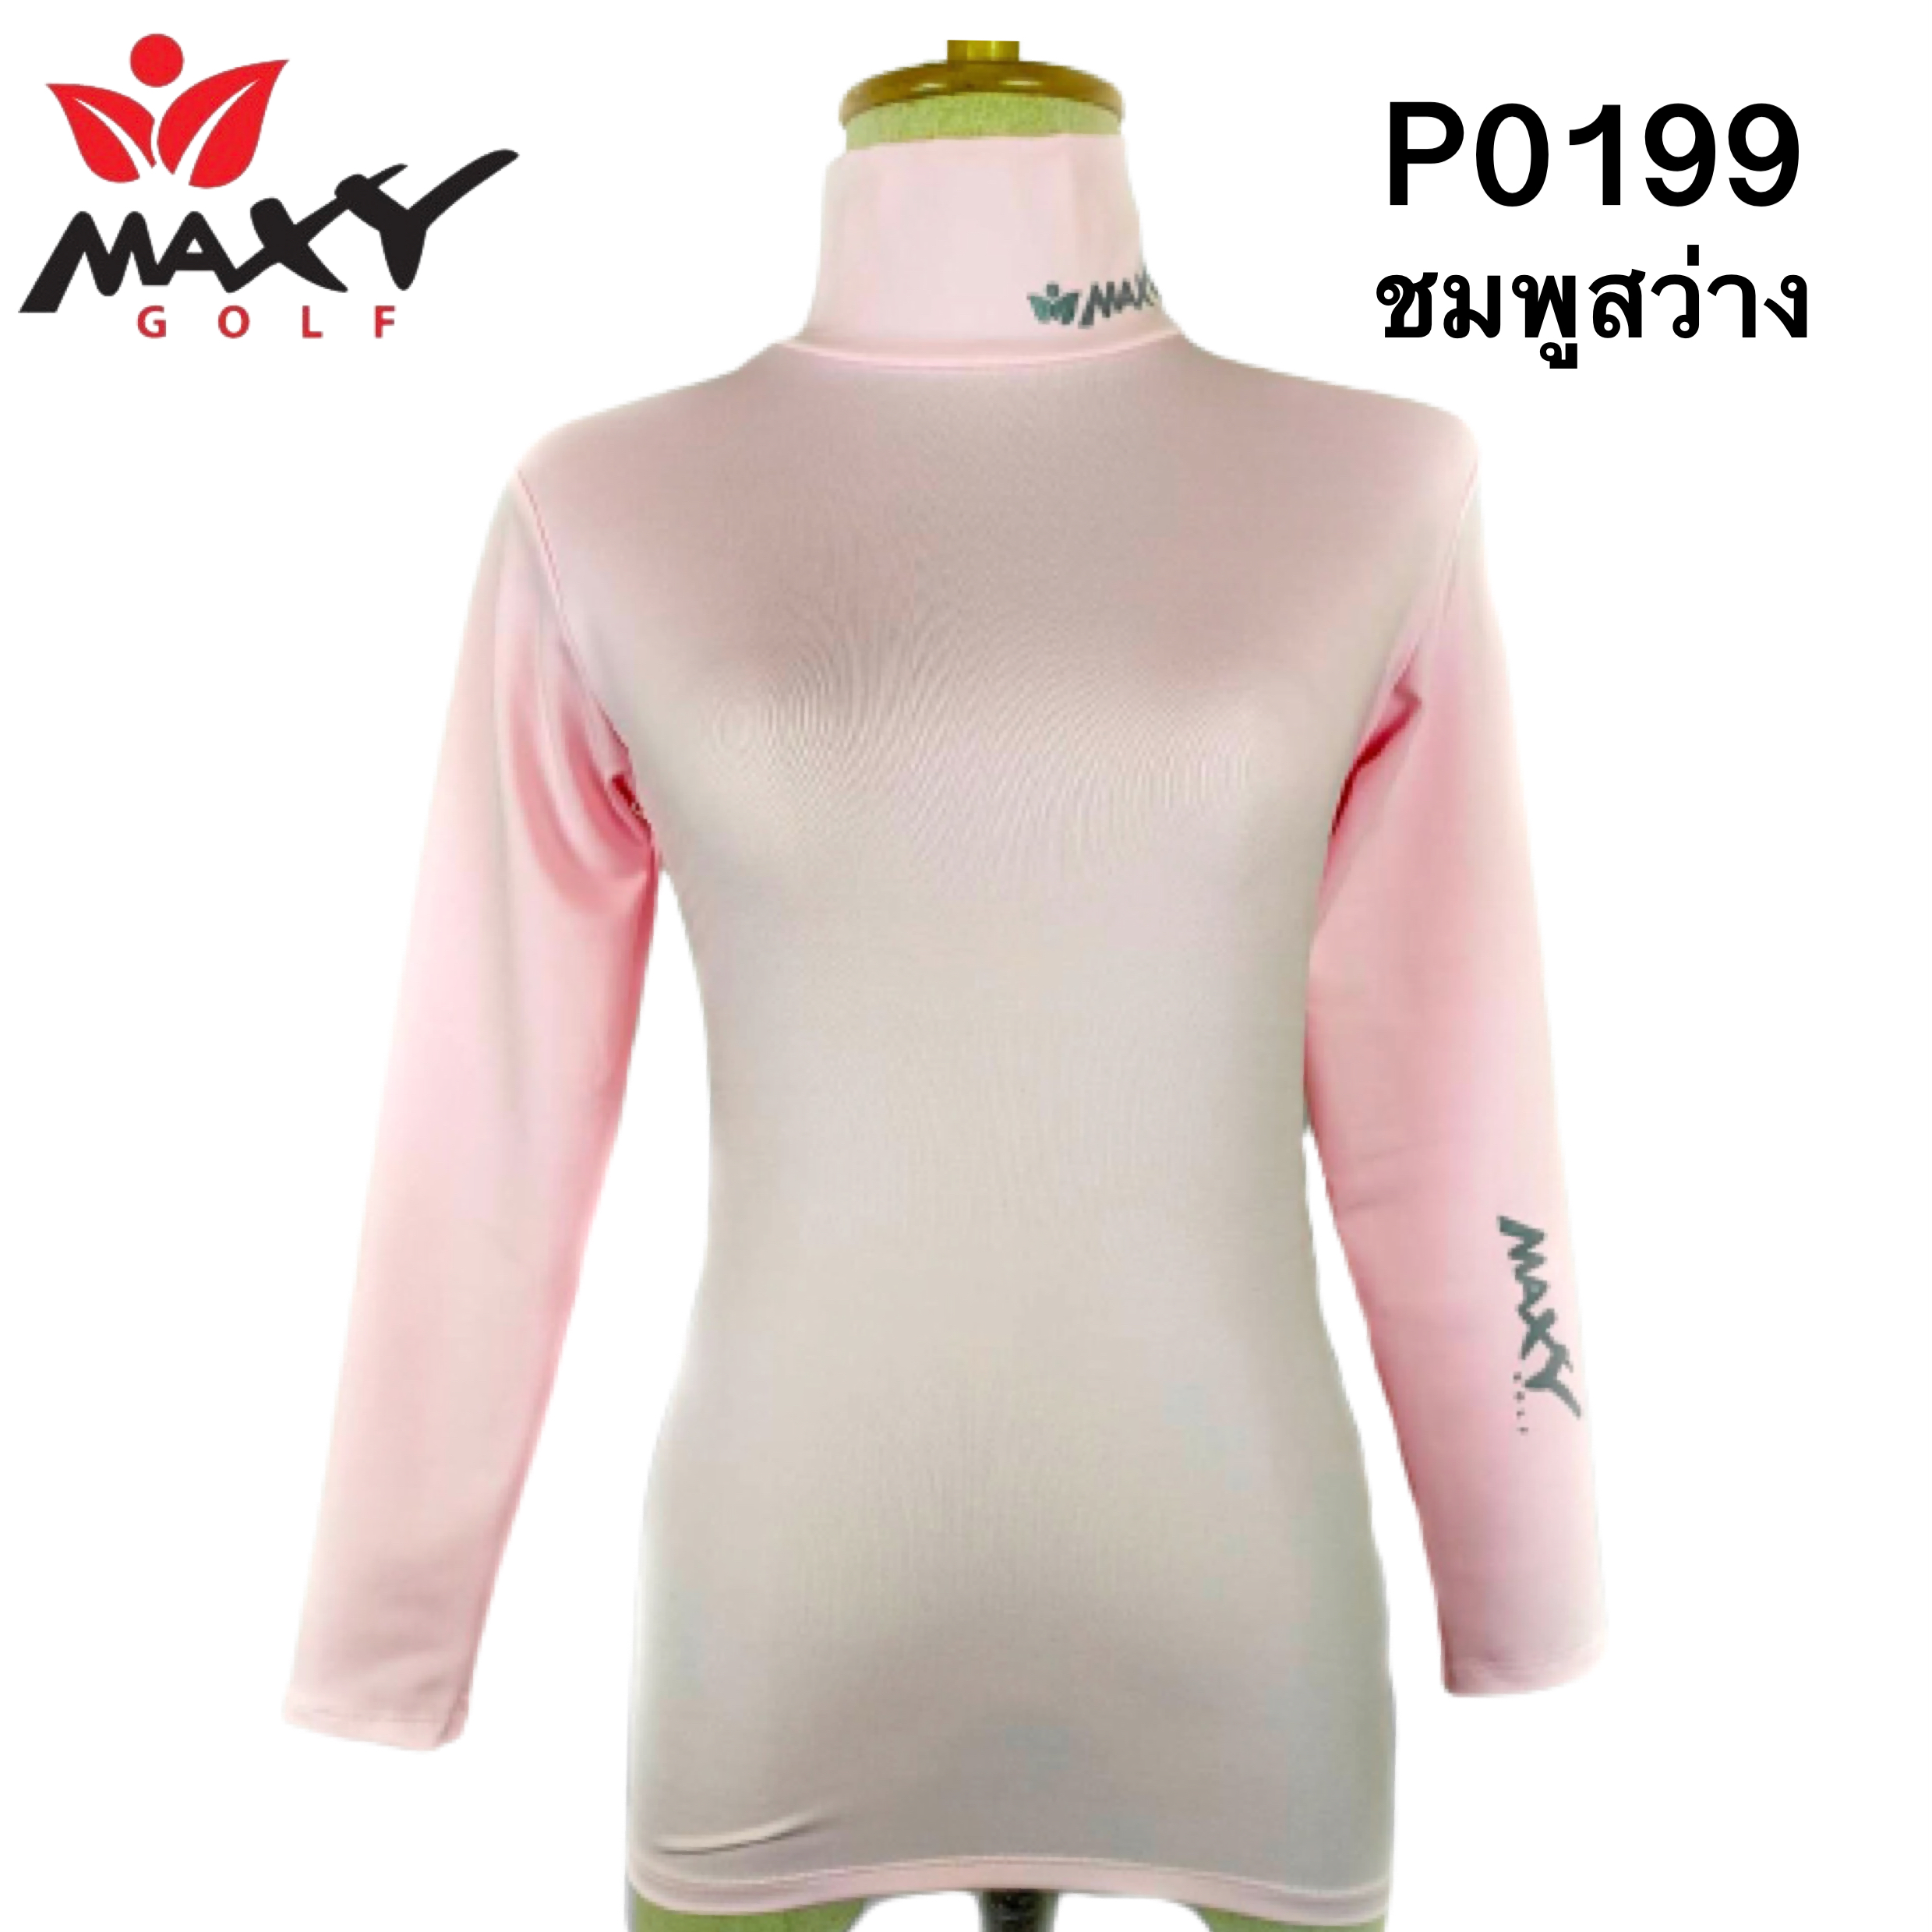 MaxyGolf เสื้อกันแดด รัดกล้ามเนื้อ คอเต่า สีชมพูสว่าง P0199